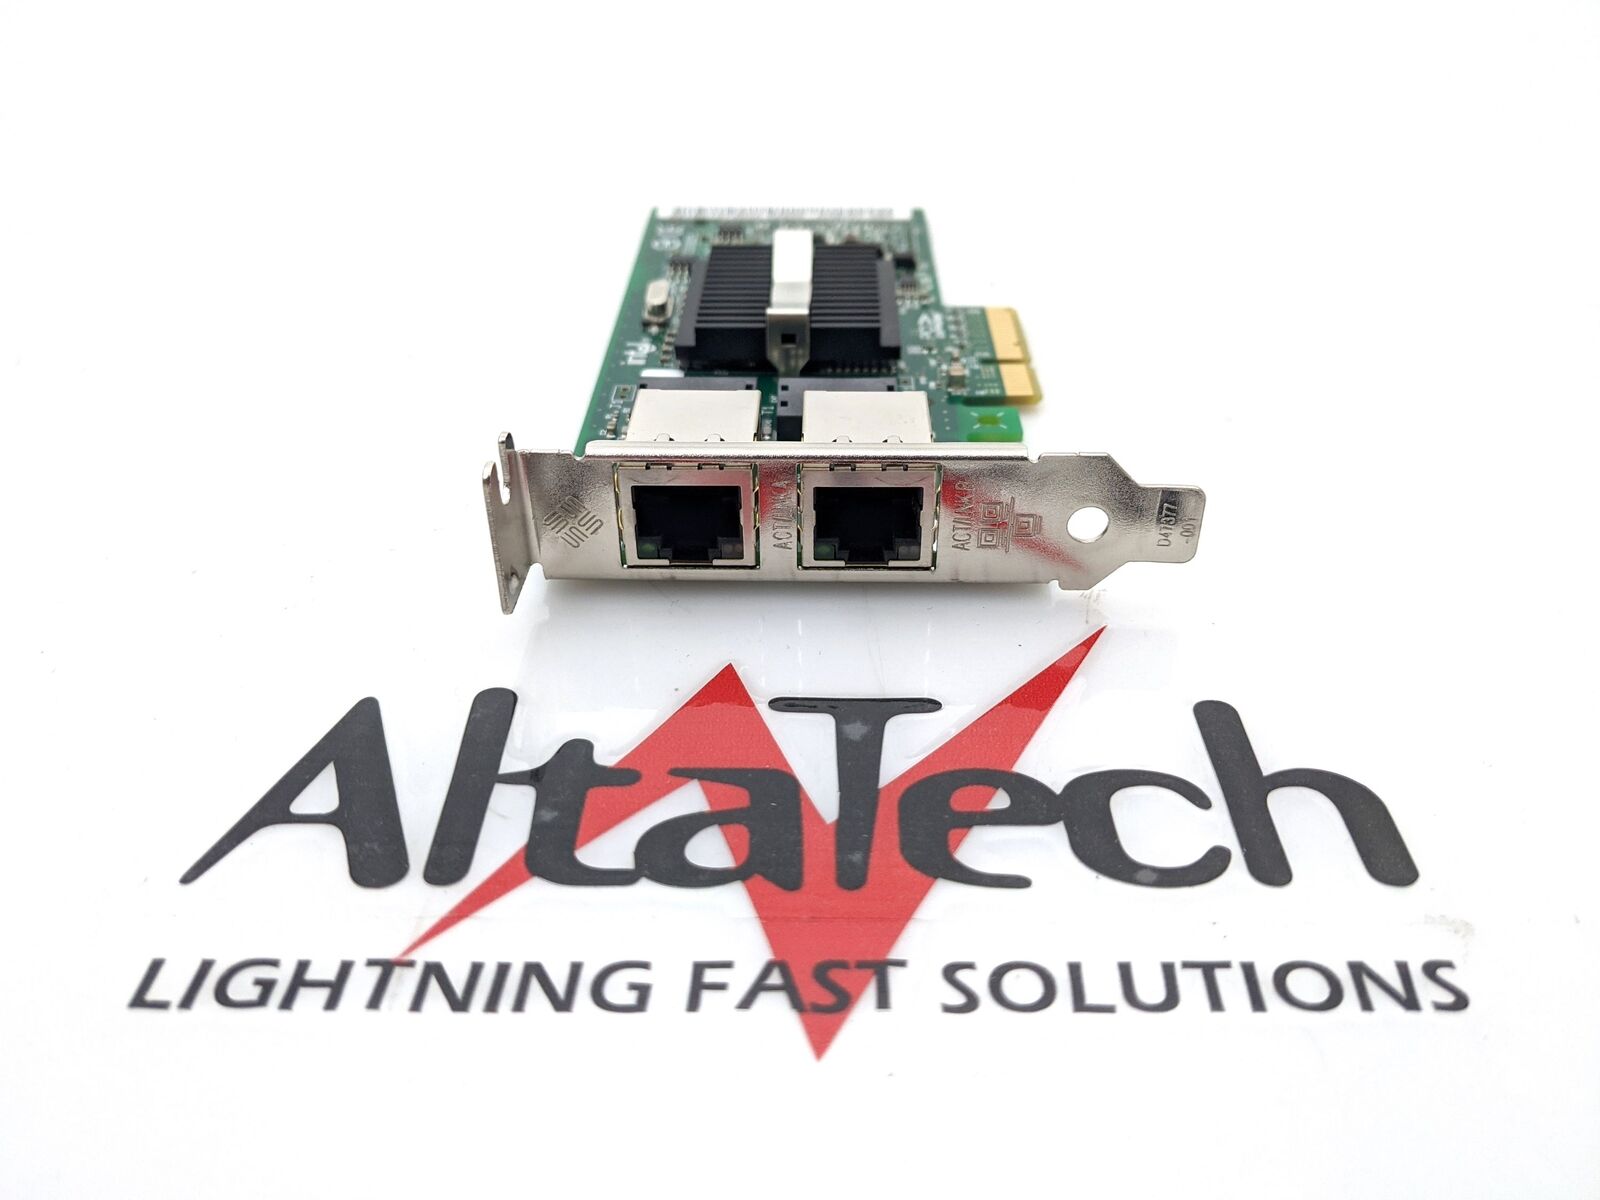 Sun Dual Gigabit UTP Ethernet Adapter 371-0905 X7280A-2 PCI-e - Fully Tested